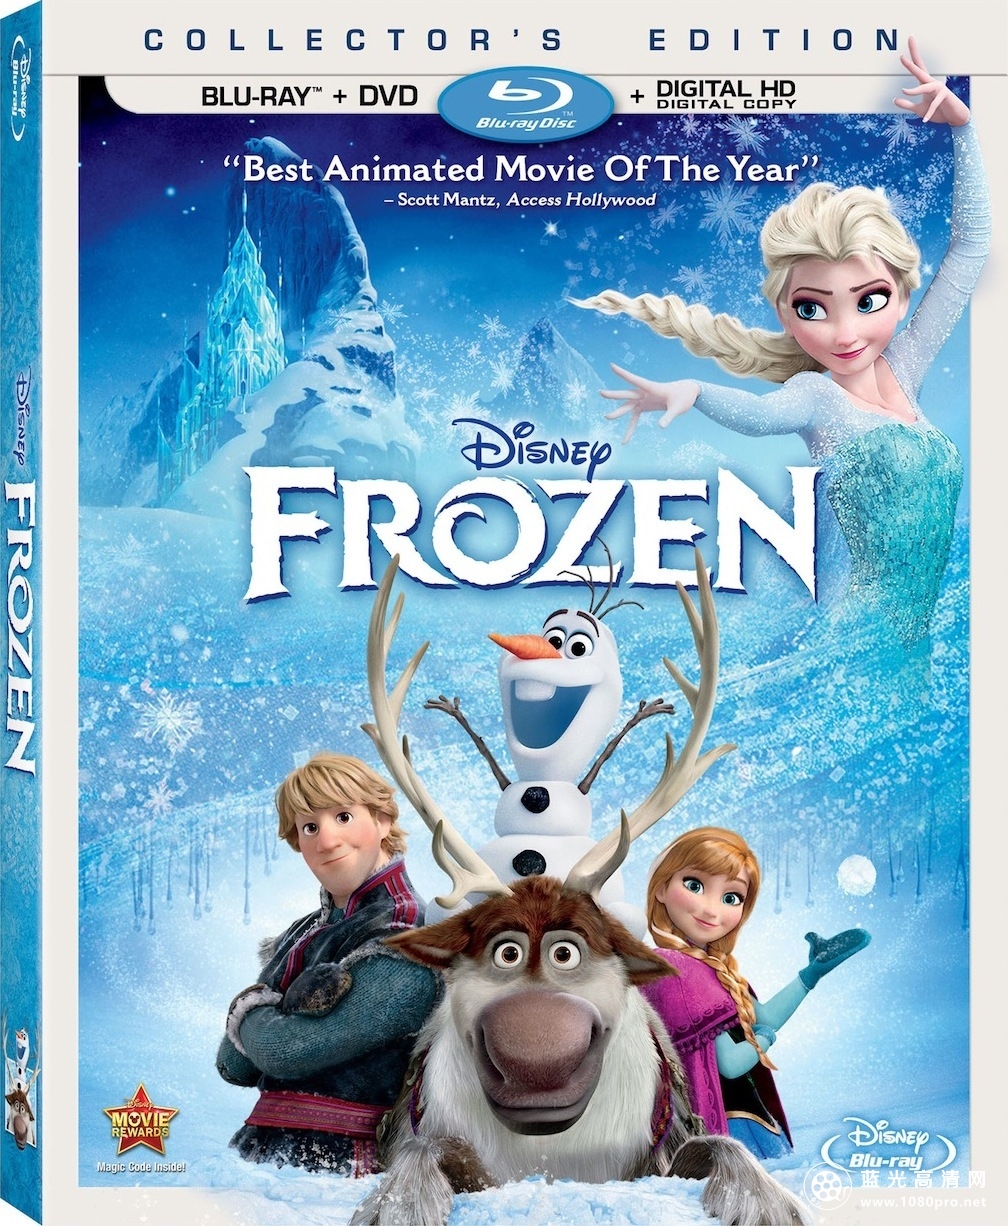 冰雪奇缘 Frozen.2013.BluRay.1080p.x264.DTS-HD.MA.7.1-HDWinG 10.42 GB-2.jpg